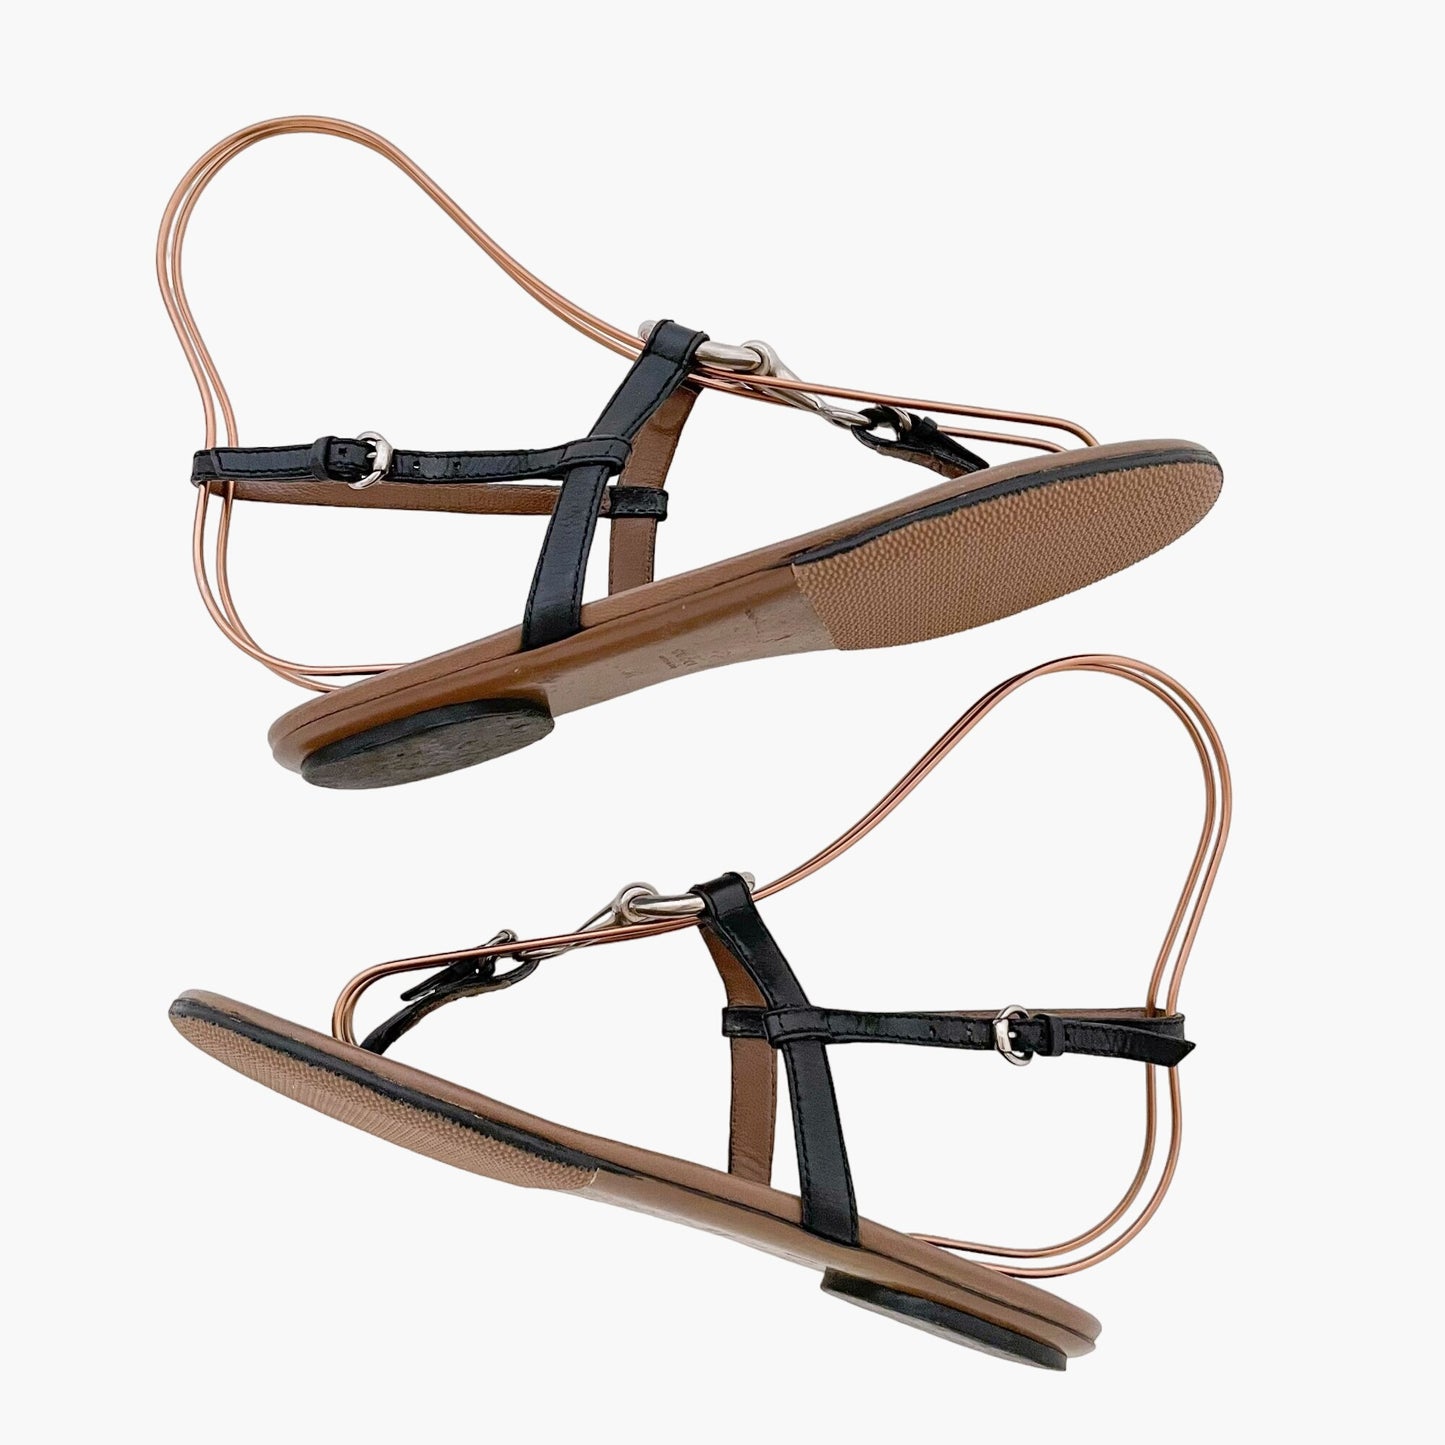 Gucci Horsebit T-Strap Sandals in Black/Brown Size 36